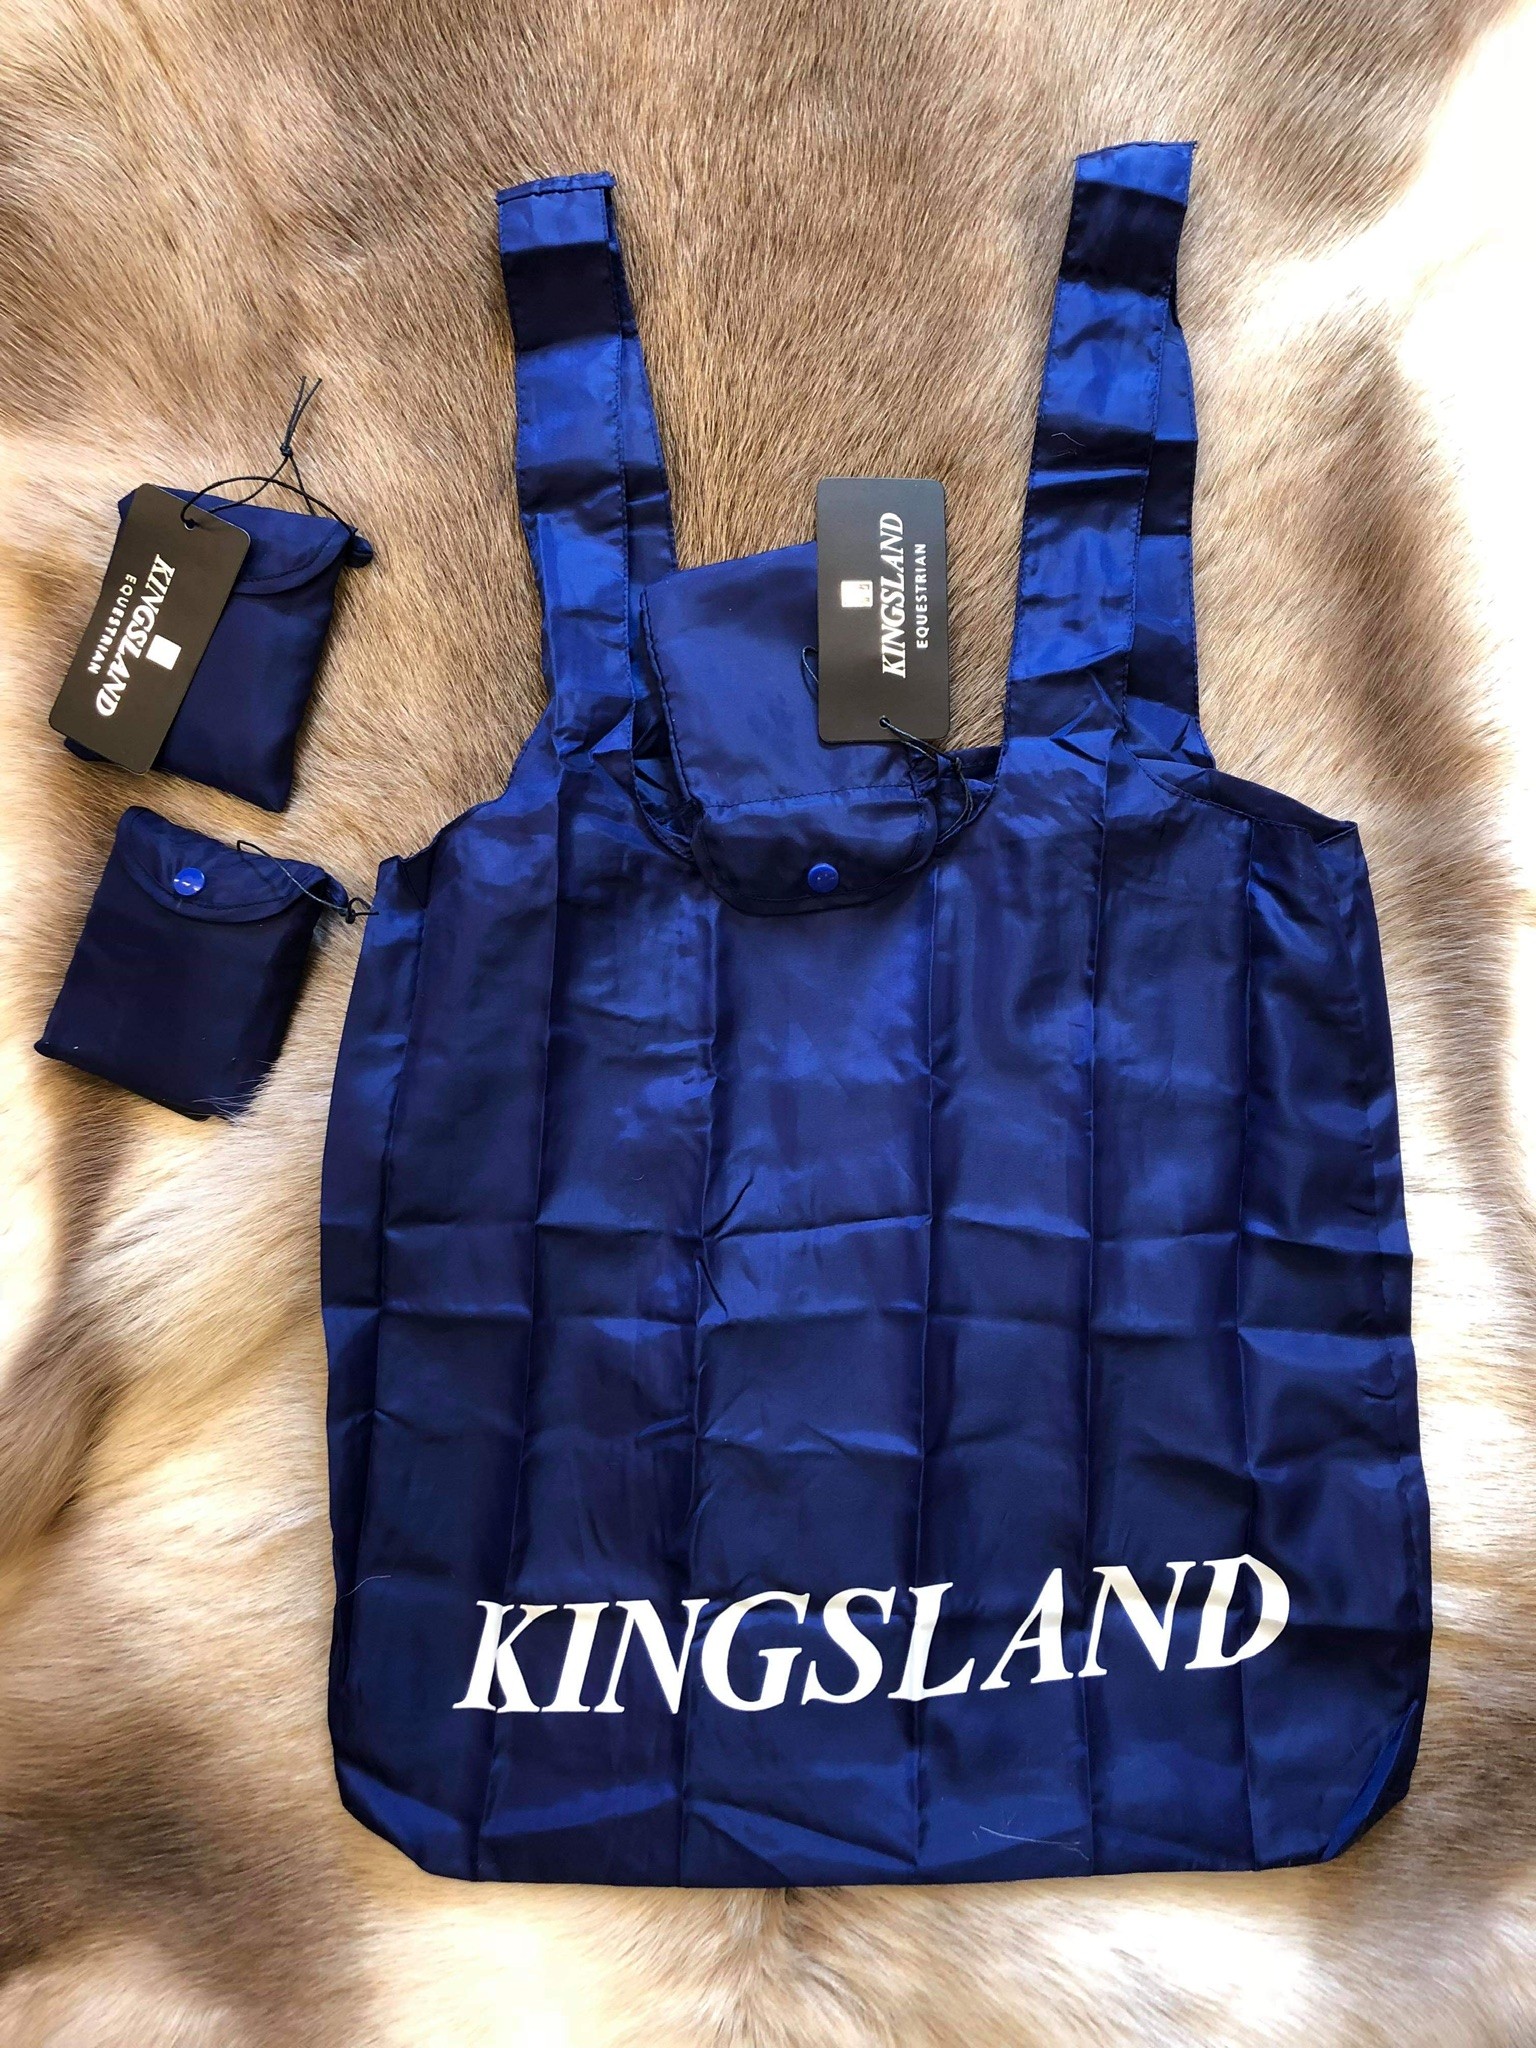 Kingsland shopping Bag - Glada Hästen